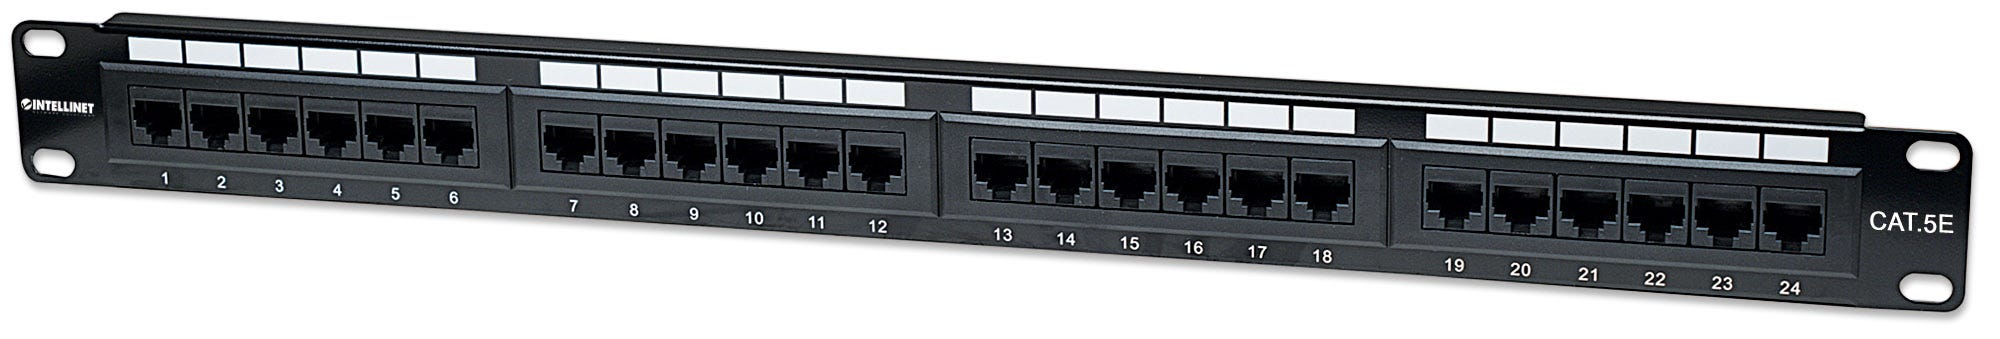 Panel Parcheo Intellinet Cat-5E, 24 Ptos 1 Niv. Rack (513555)